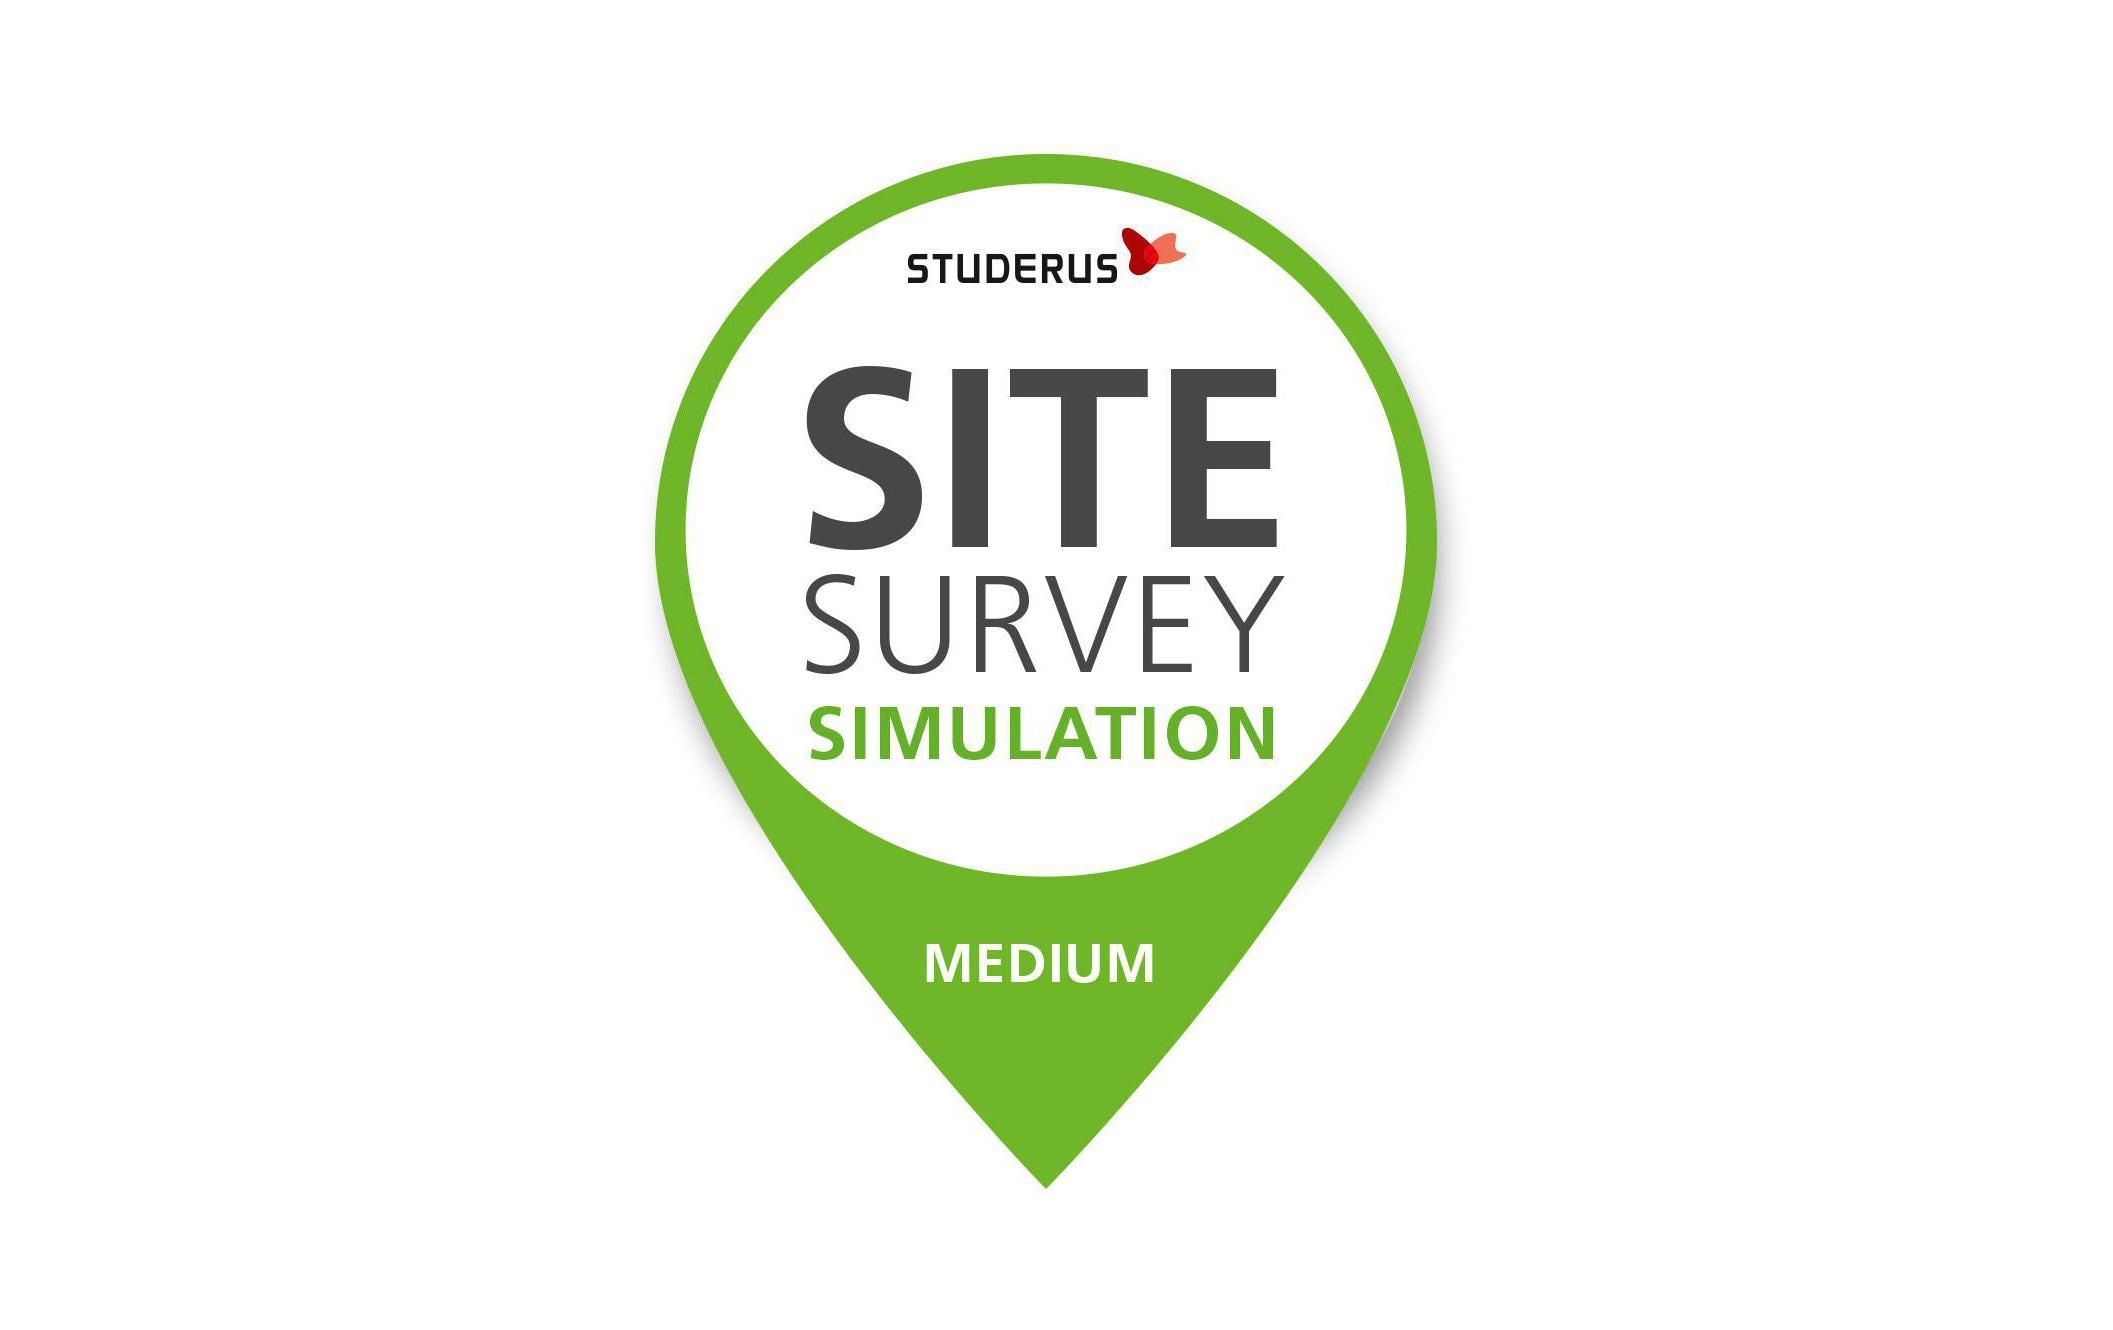 Zyxel Studerus WLAN Site Survey Medium Simulation 2500-10000m2